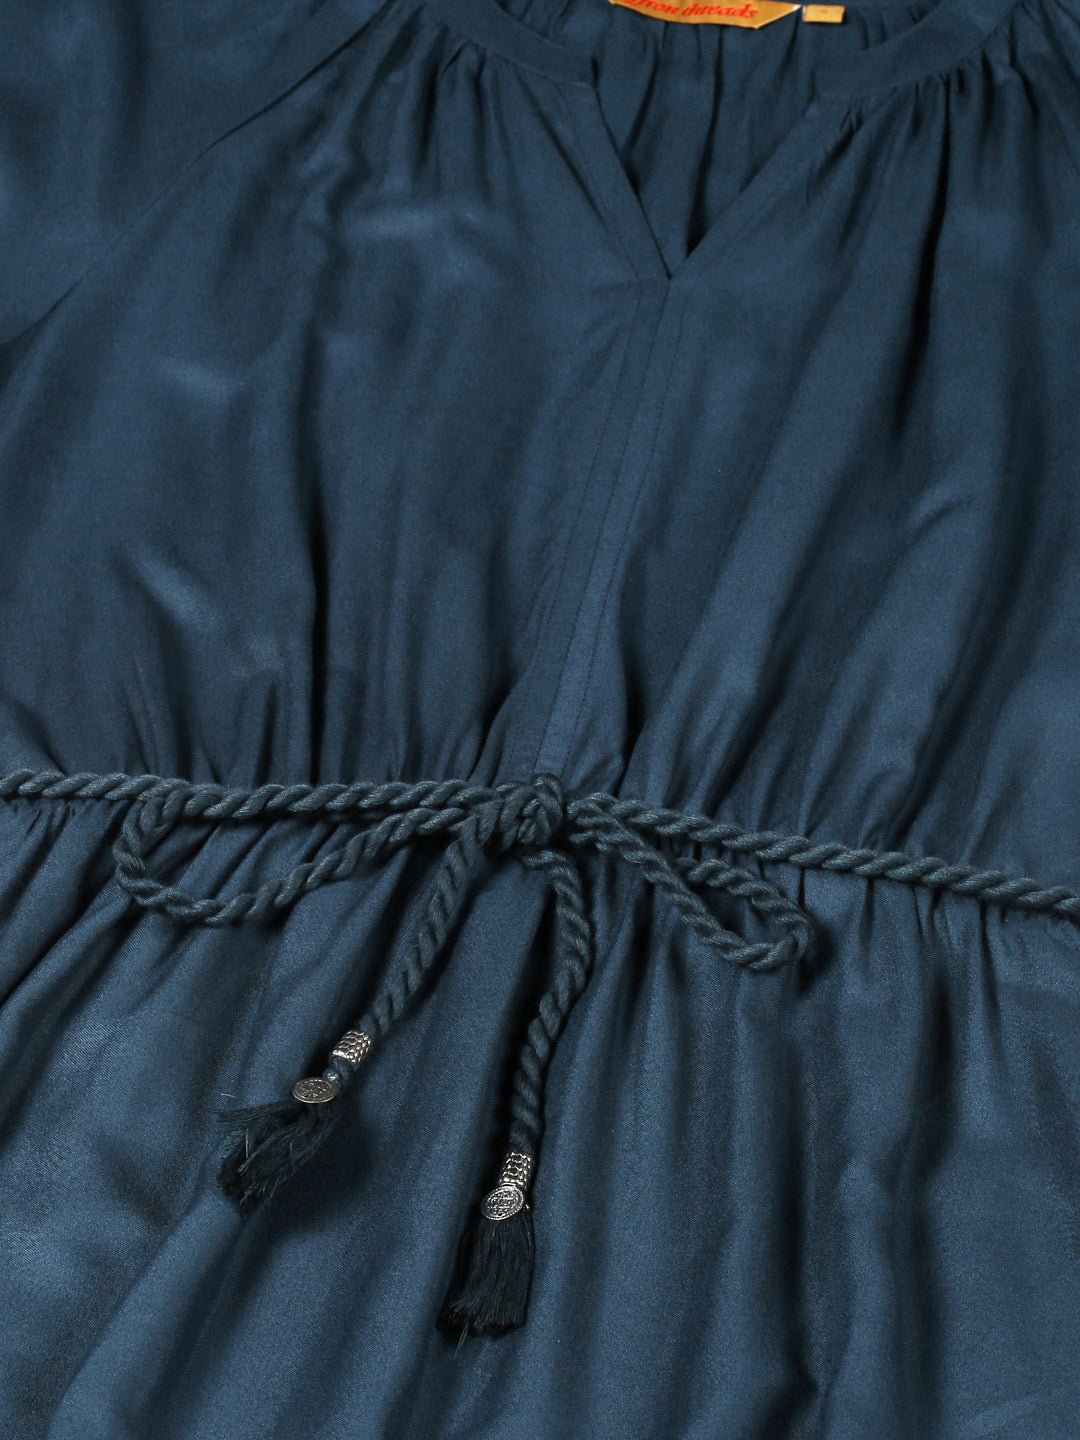 Teal Boho Tiered Midi Dress with Hand-Braided Waist Belt